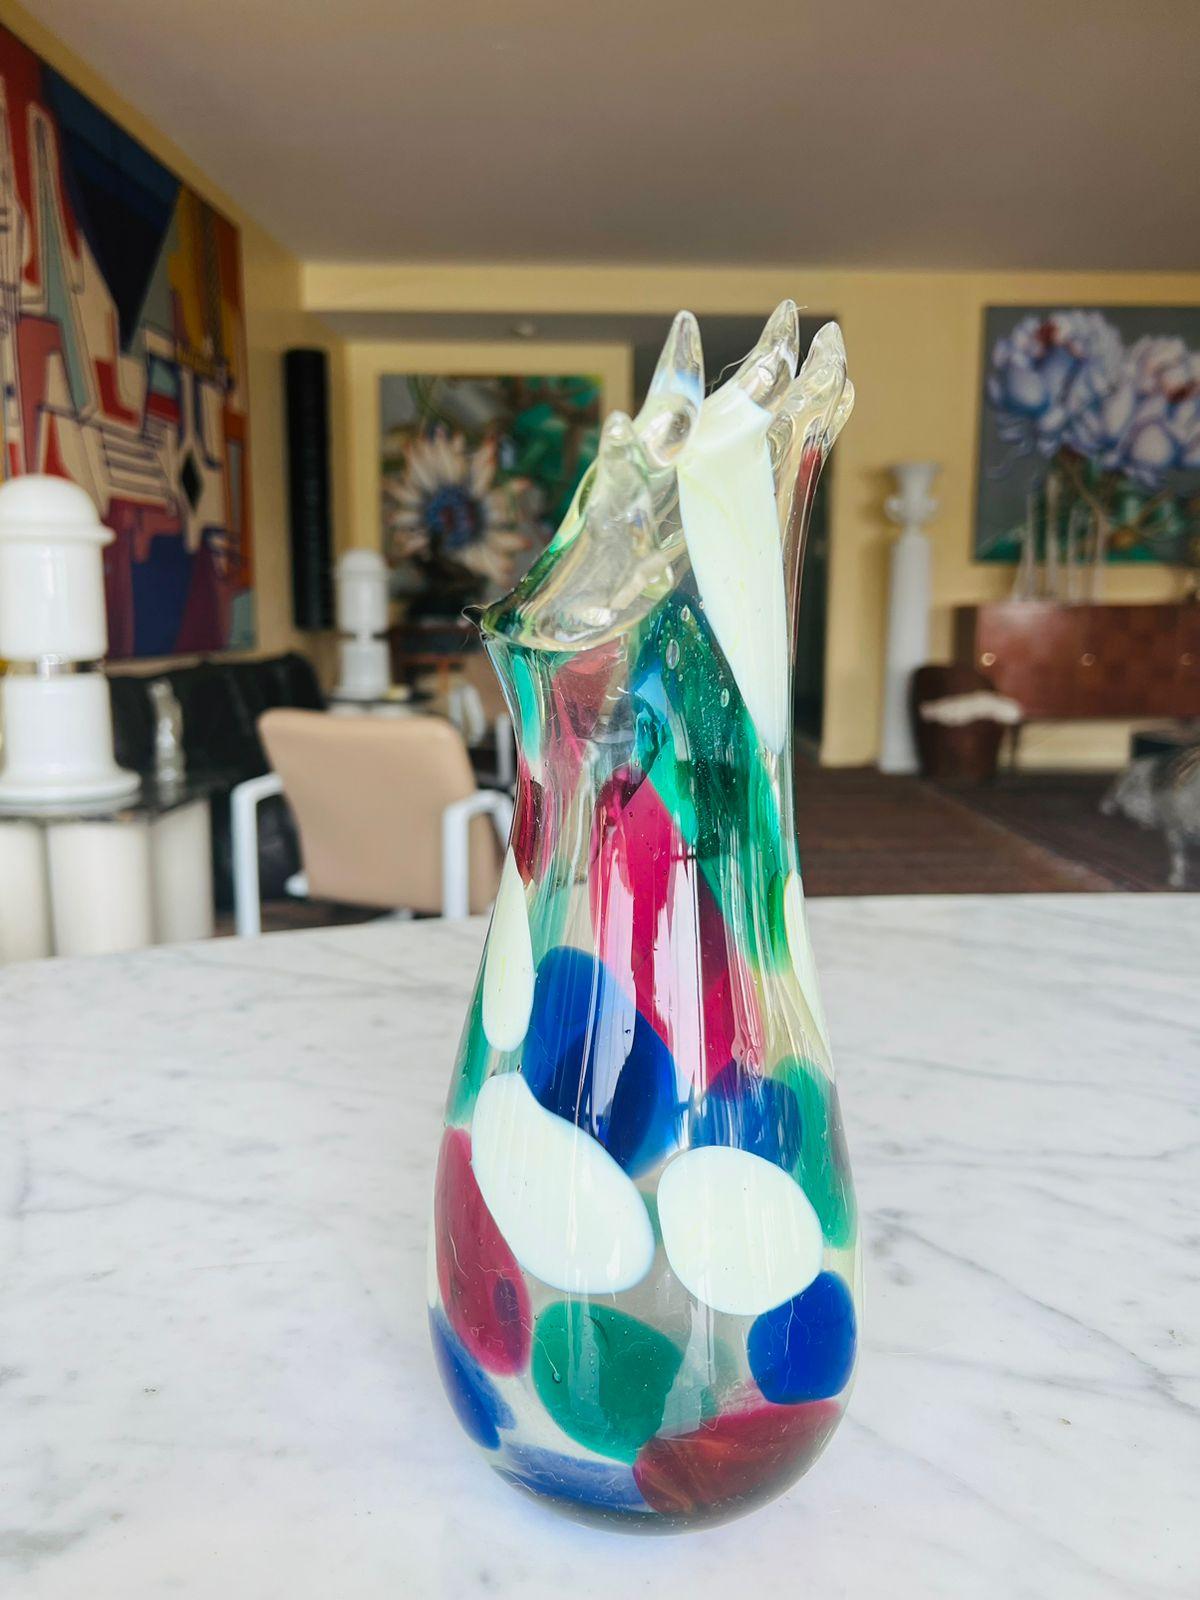 Unglaubliche und seltene Aureliano Toso Murano Glas circa 1950 mehrfarbige Vase.